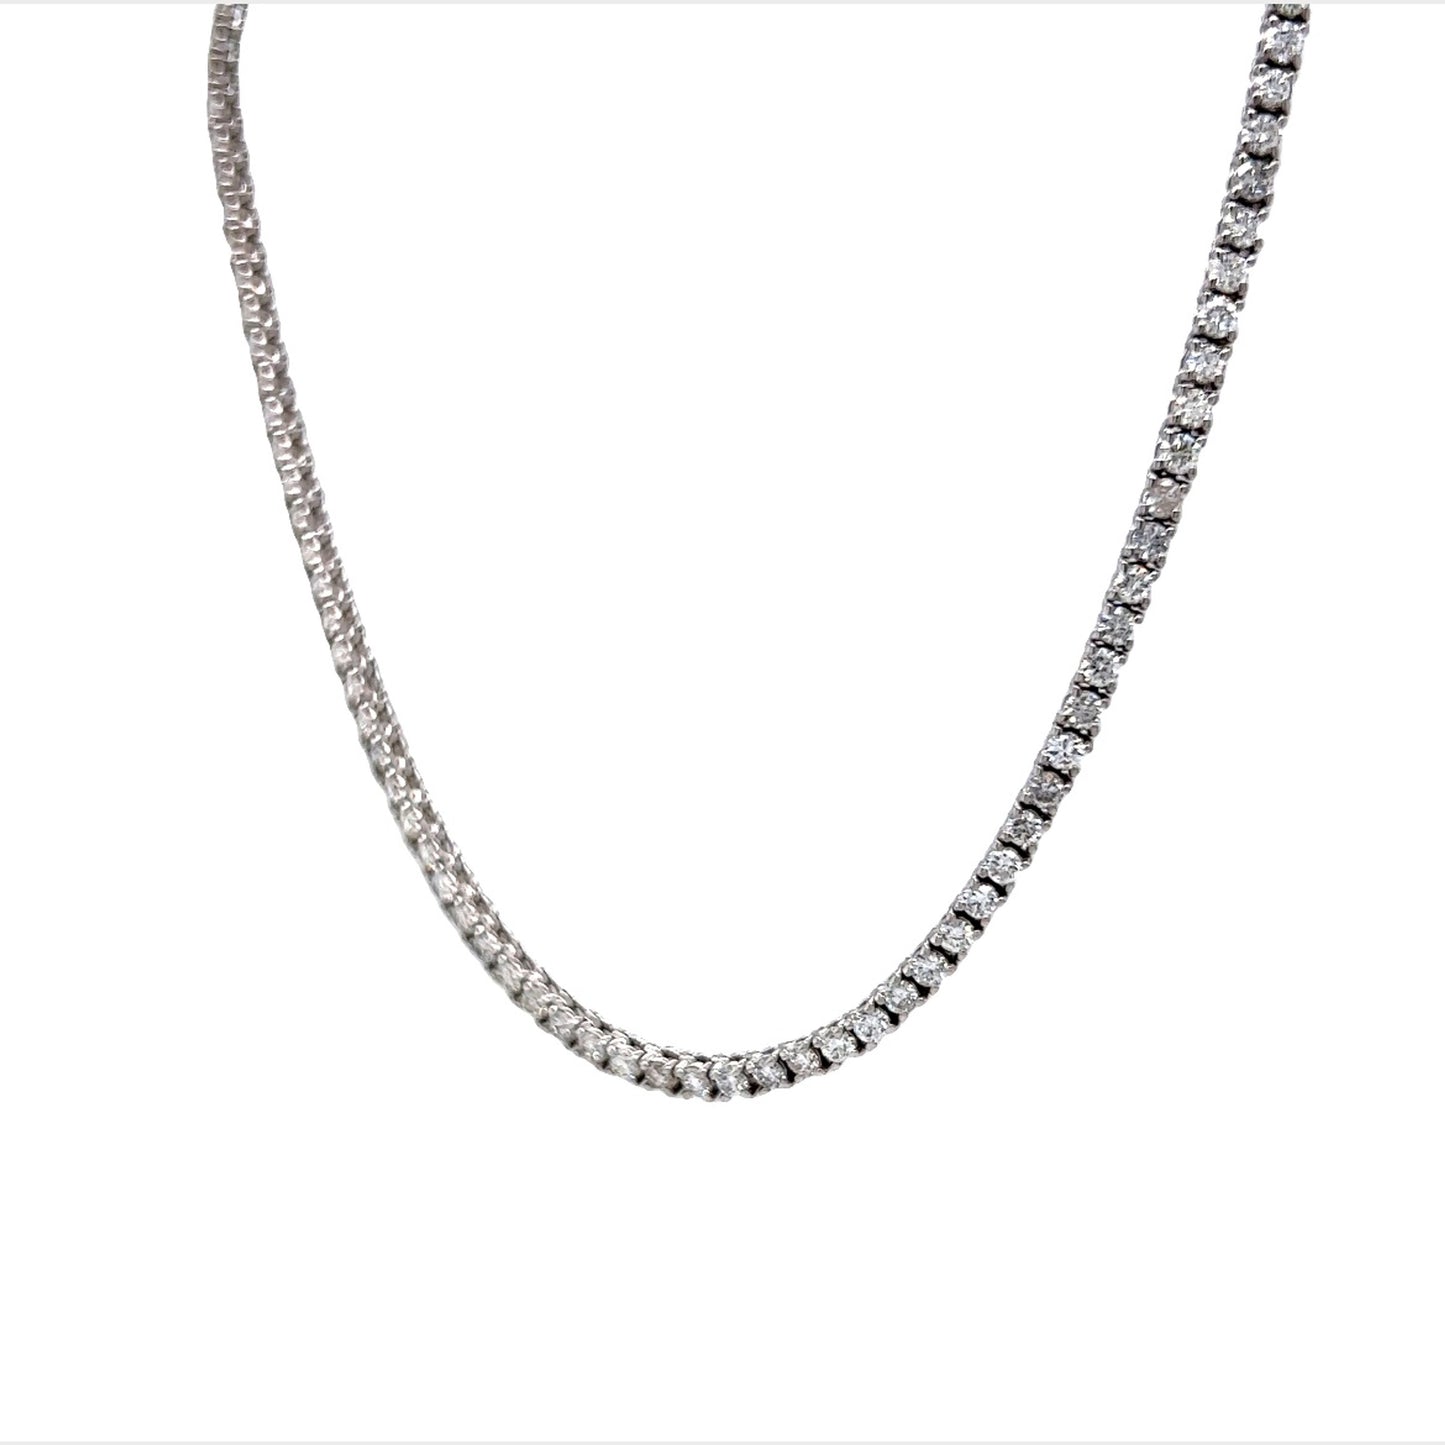 6.05 Carat Diamond Tennis Necklace in 18k White Gold